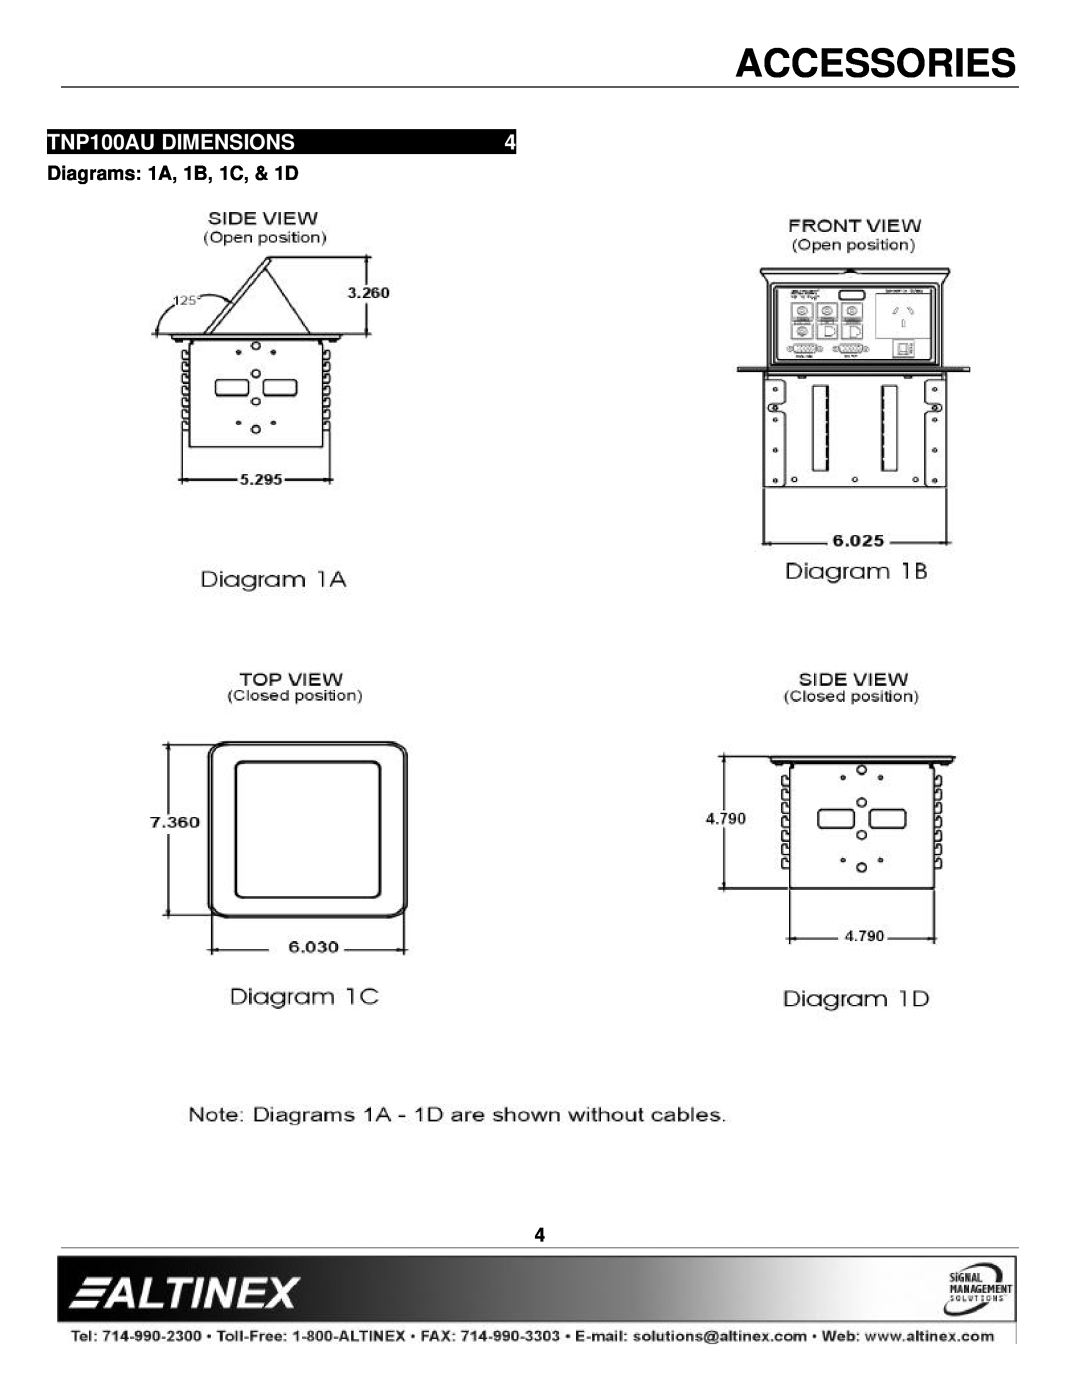 Altinex manual TNP100AU DIMENSIONS, Accessories, Diagrams 1A, 1B, 1C, & 1D 